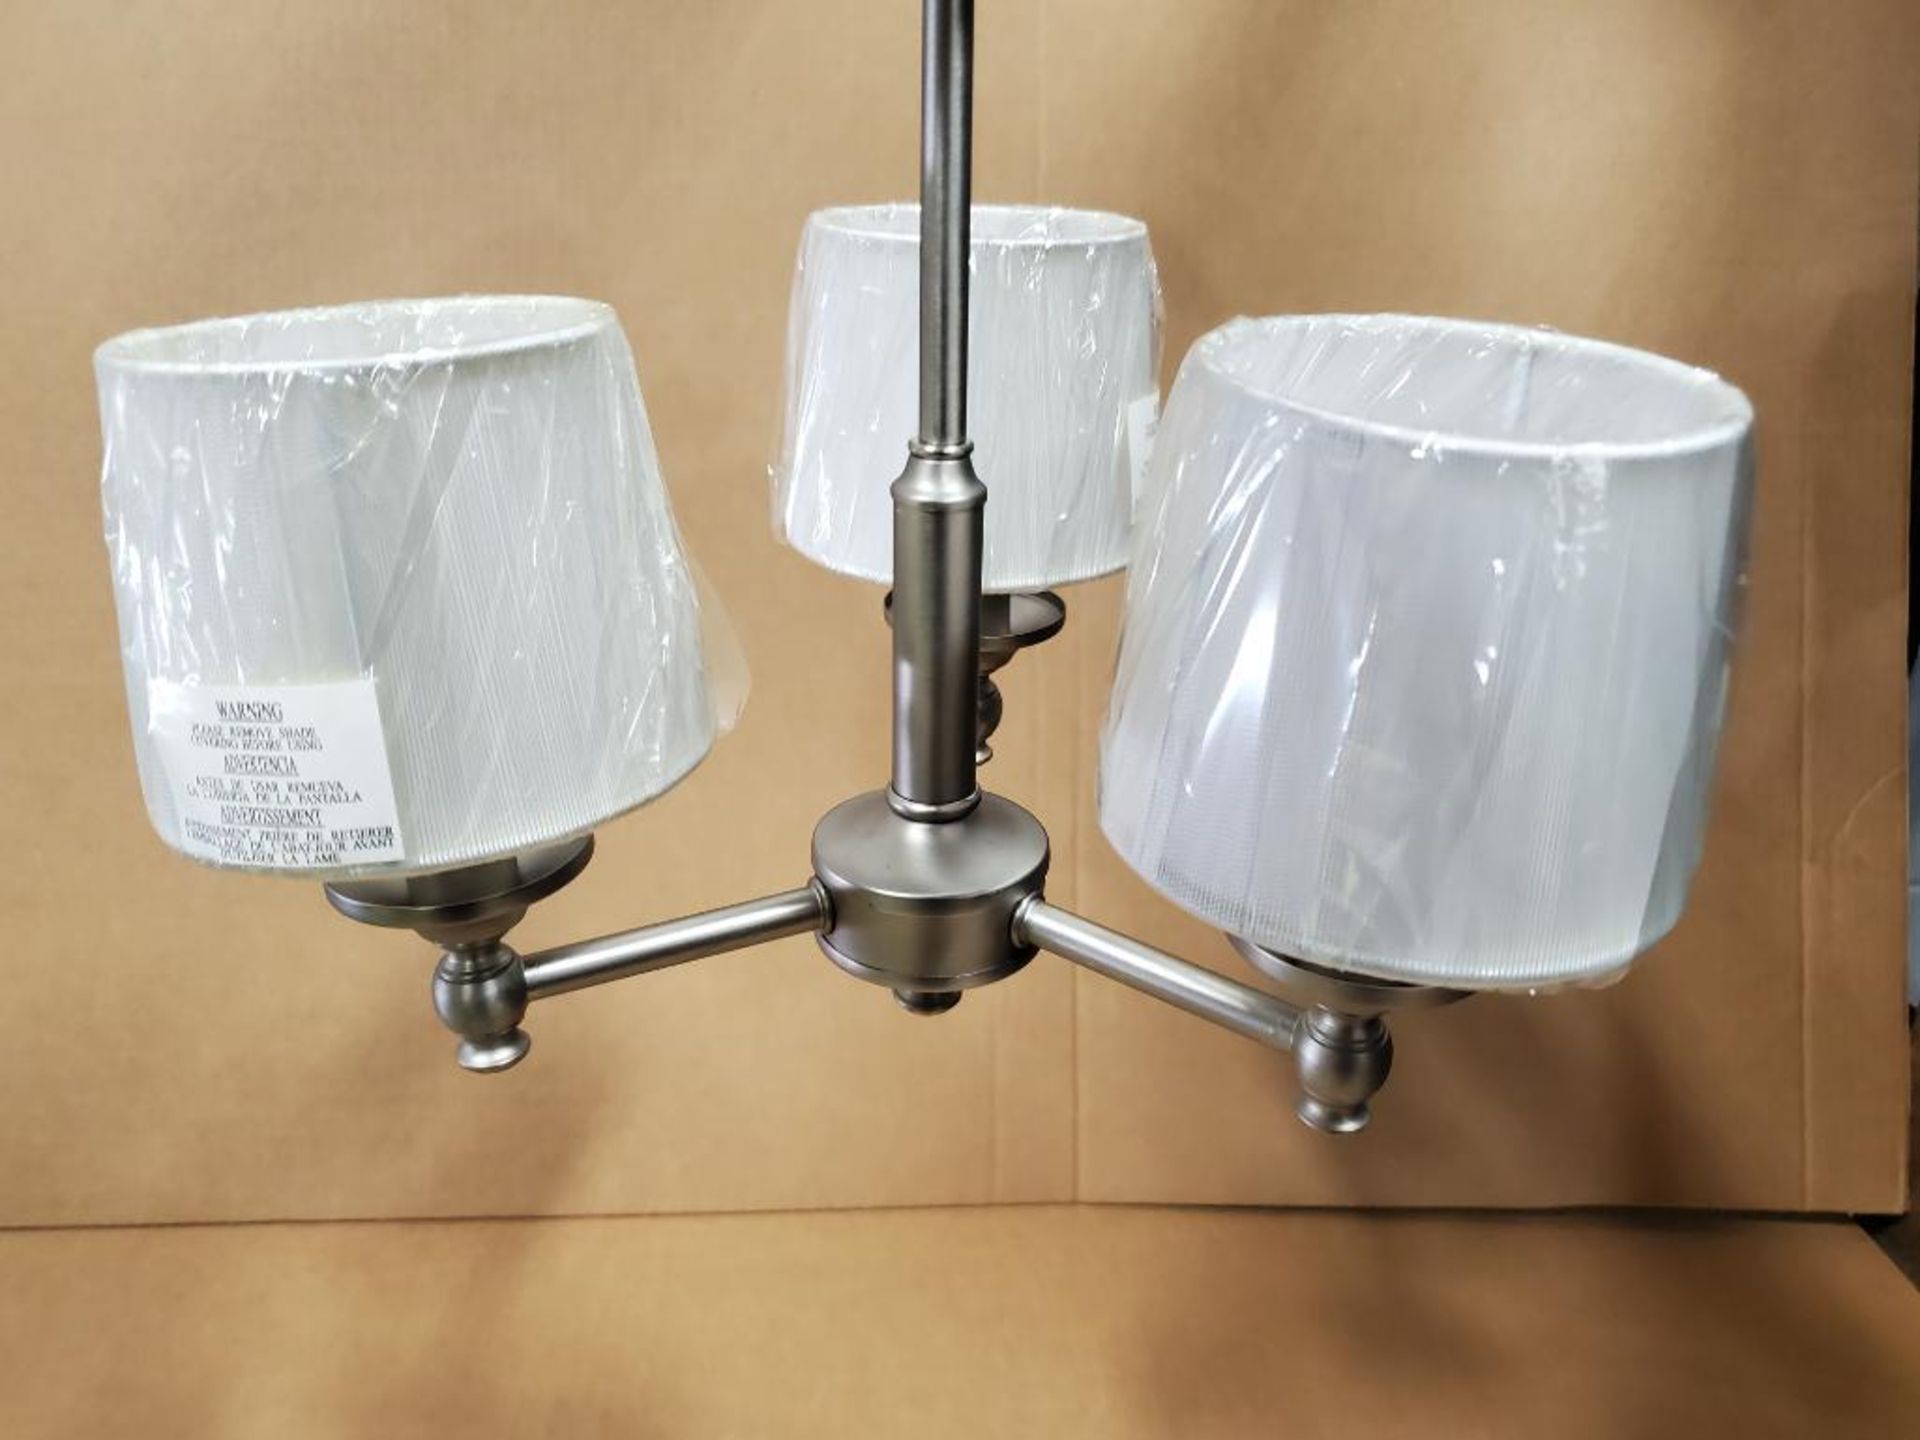 Qty 112 - SunLink 12 volt 3-light chandelier. Part #RV-185303-401. New in bulk box. - Image 2 of 10